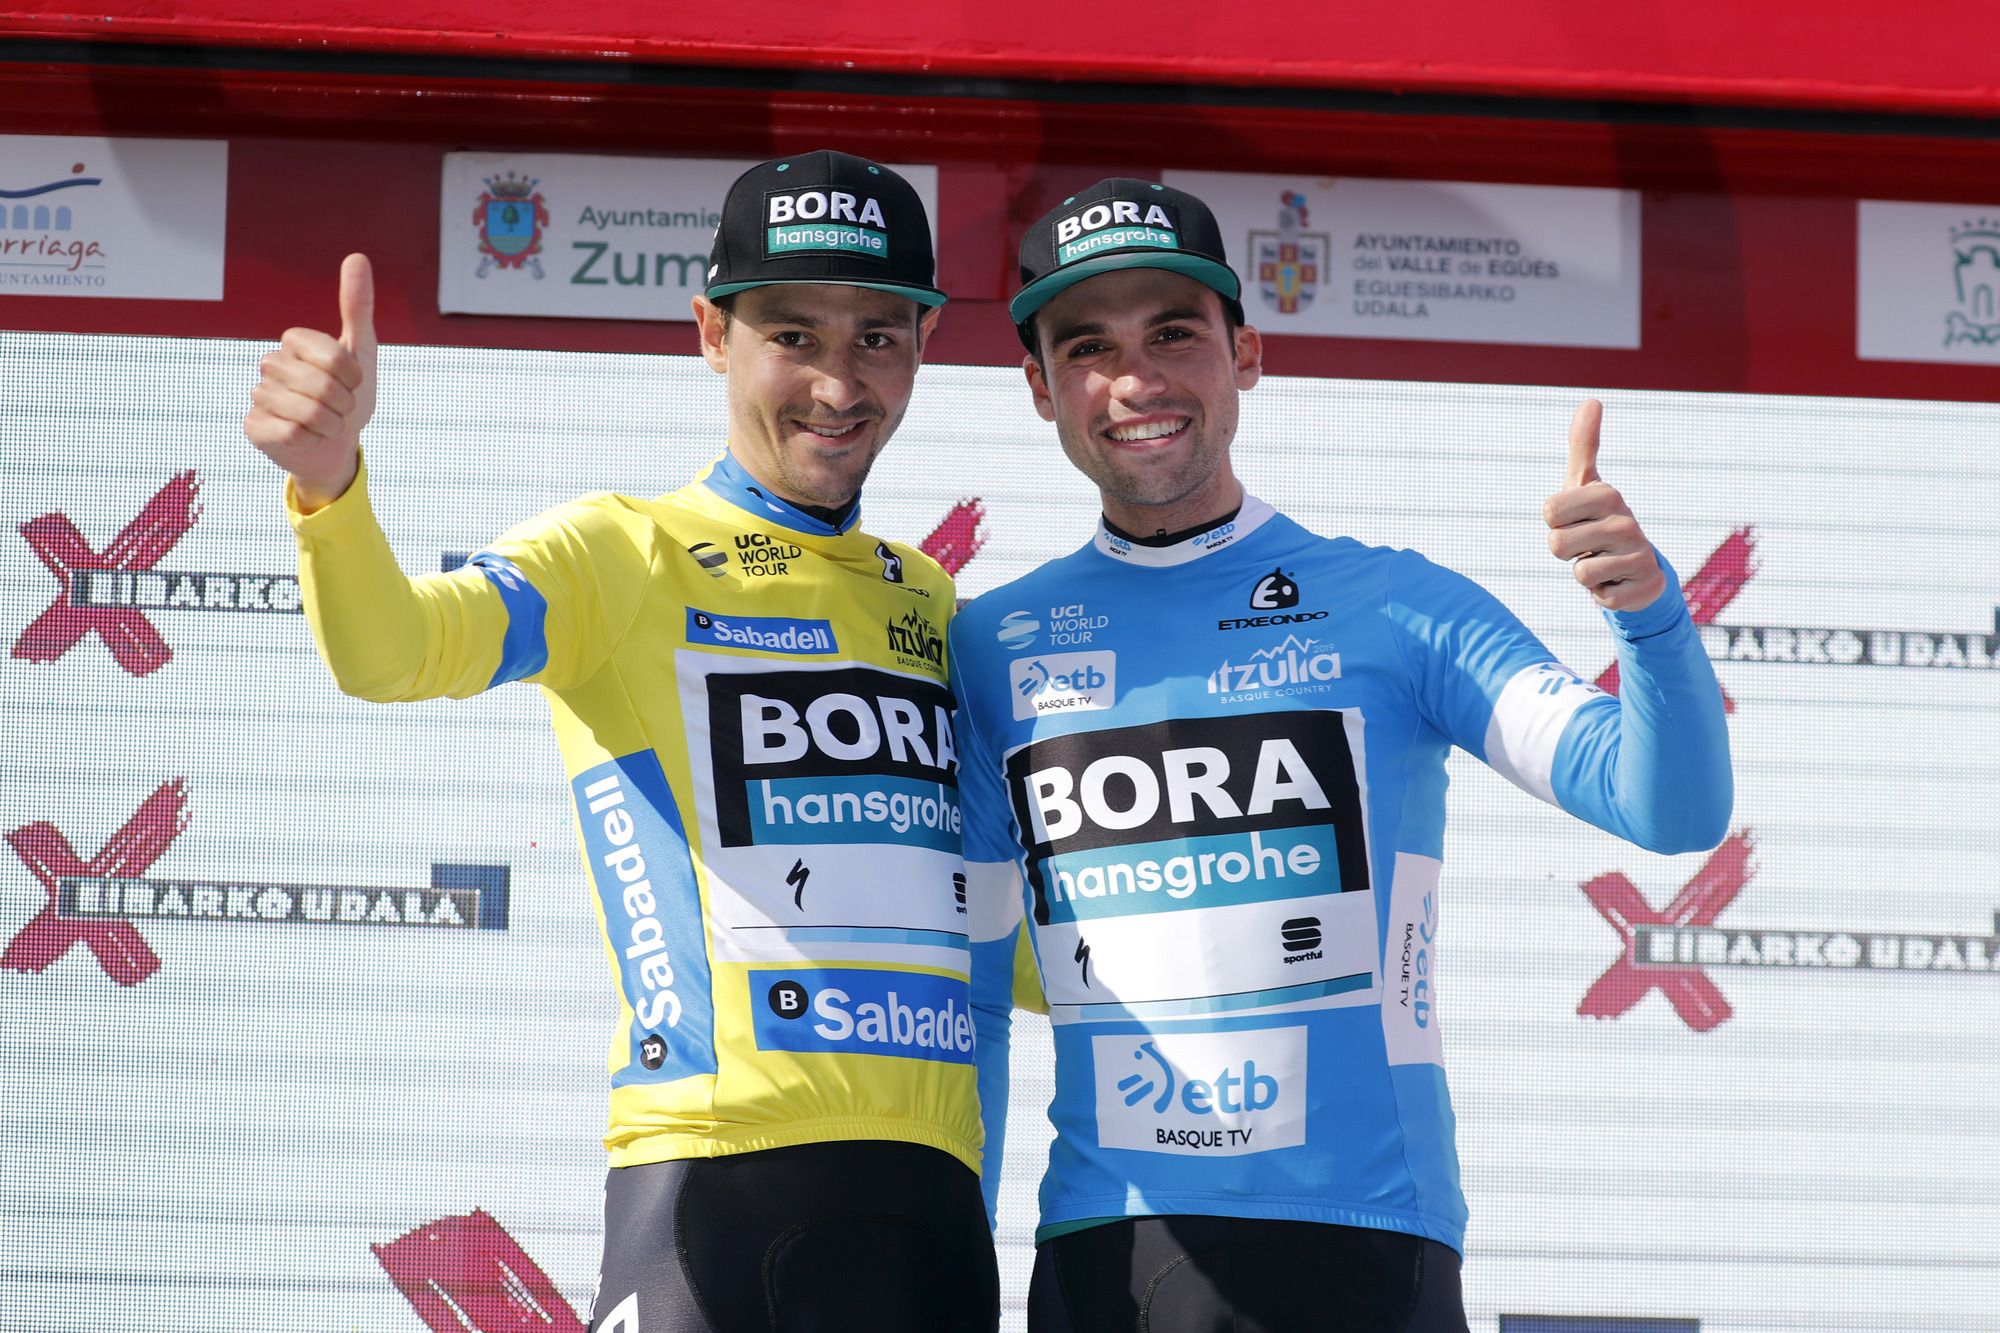 baskicko 19 etapa 5 bora podium bohfb